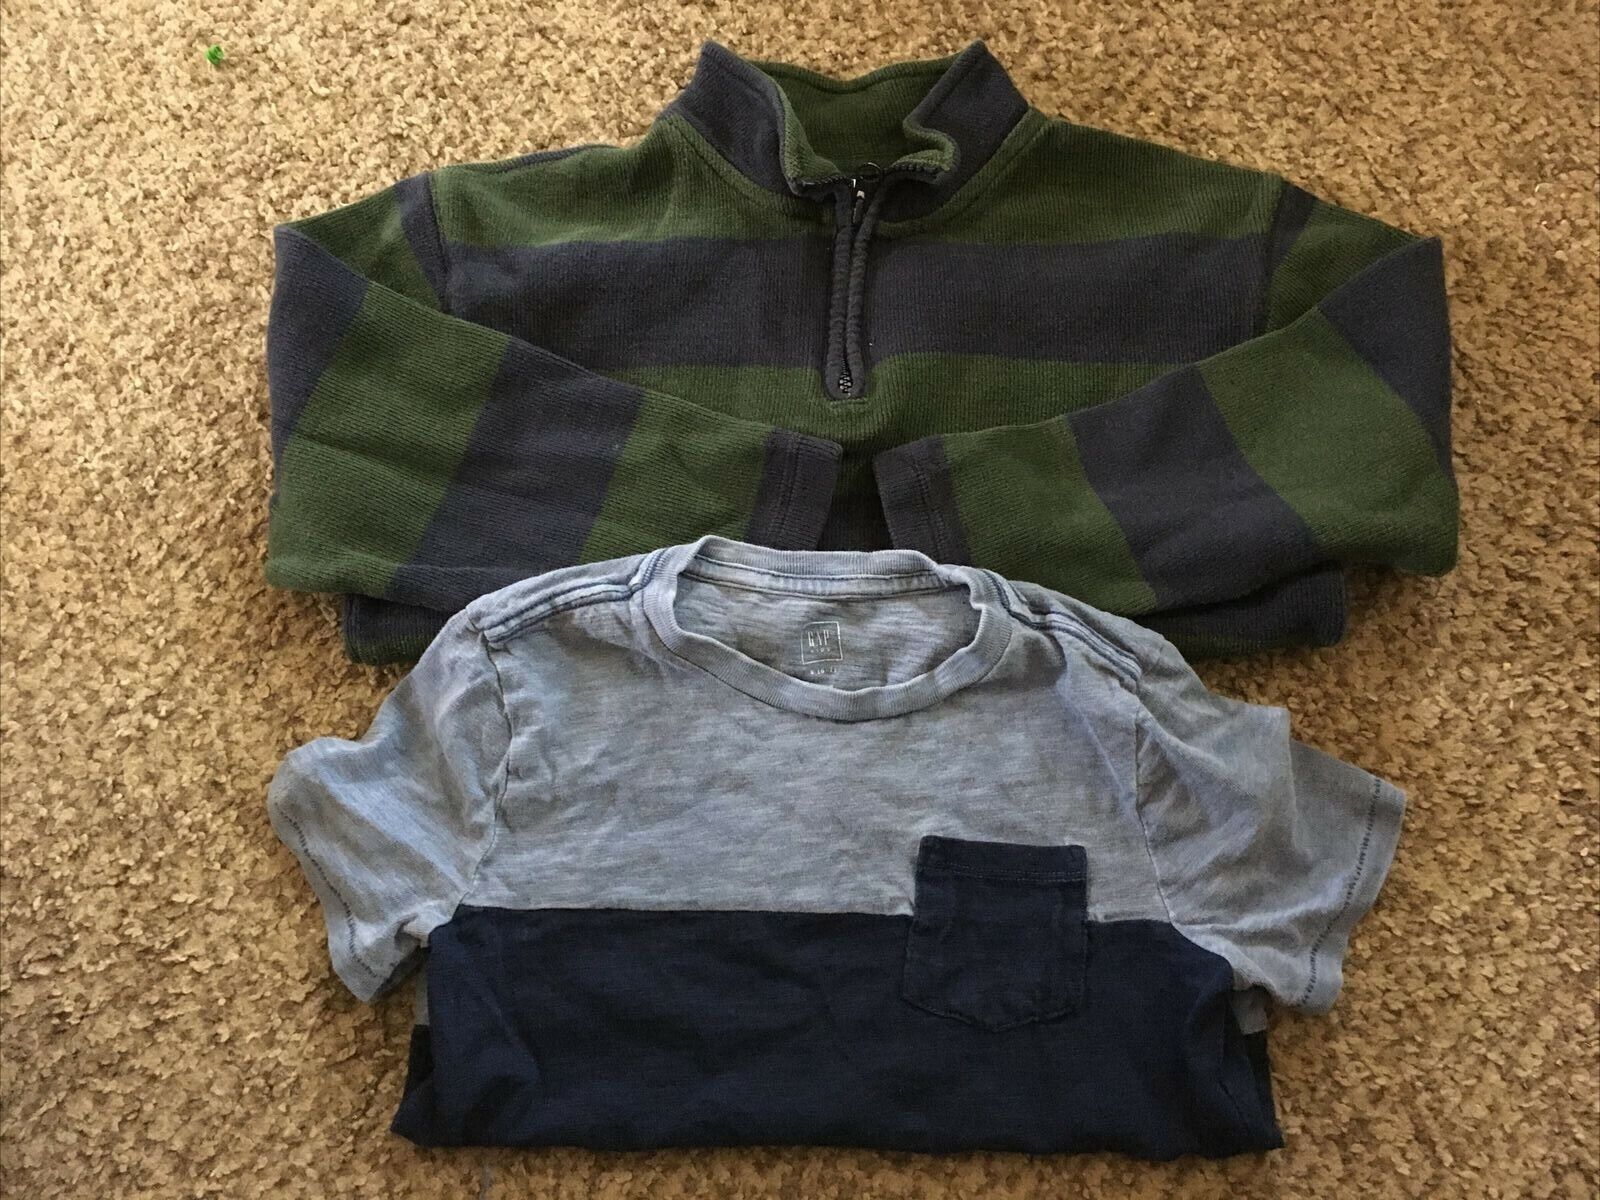 Gap Kids Boys Tops 1 Pullover Sweater, 1 T-Shirt Size 6-7 Gap